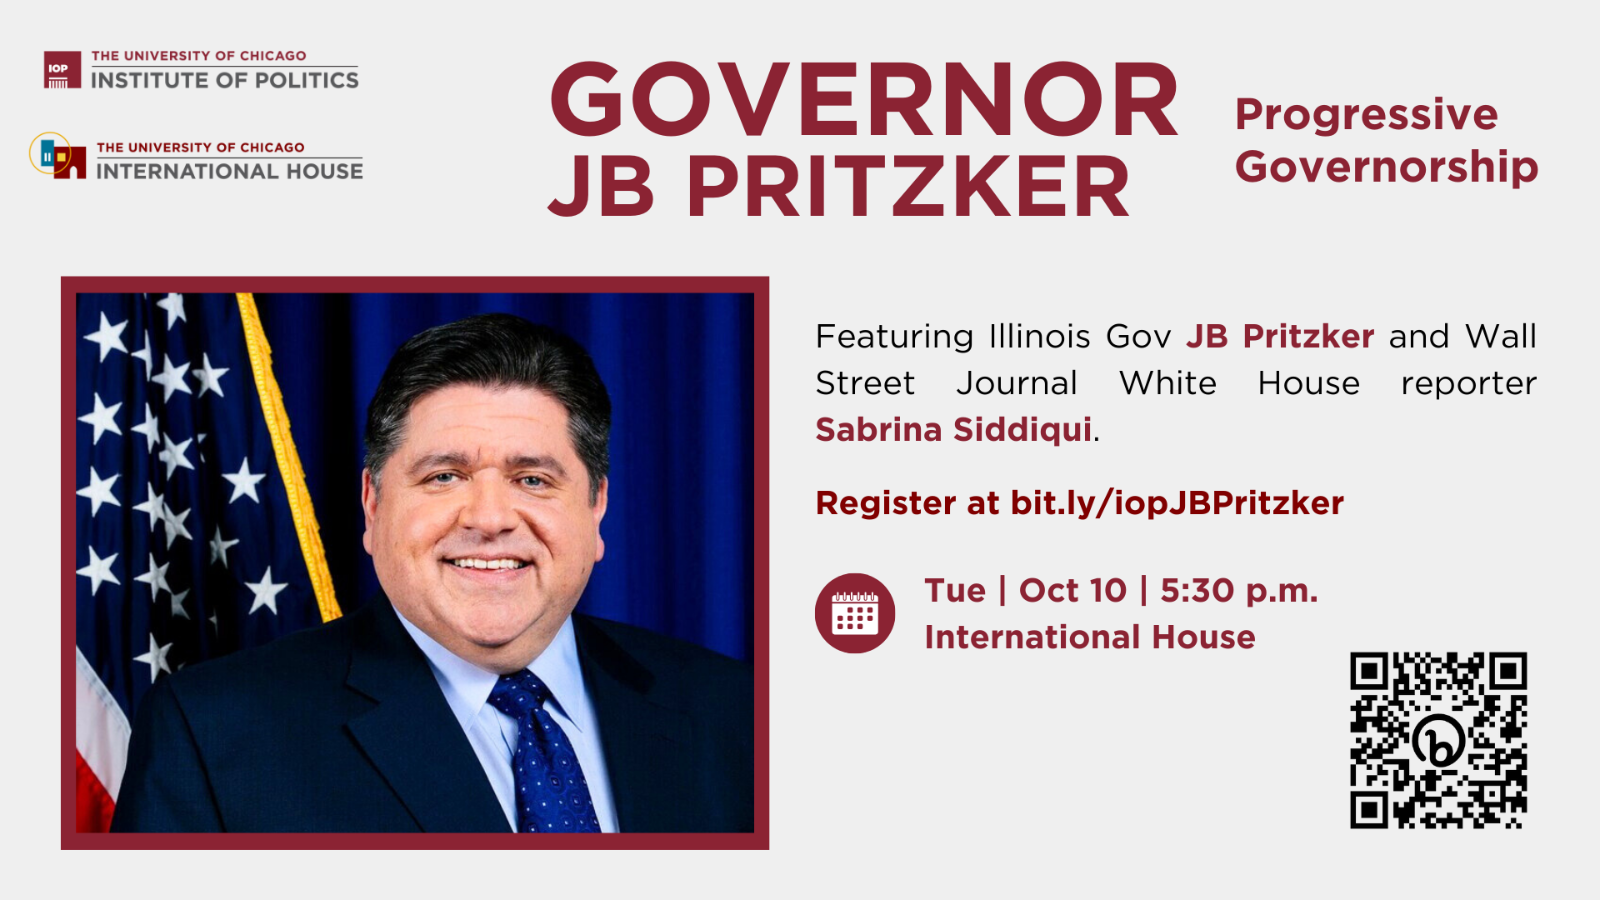 JB Pritzker: Progressive Governorship